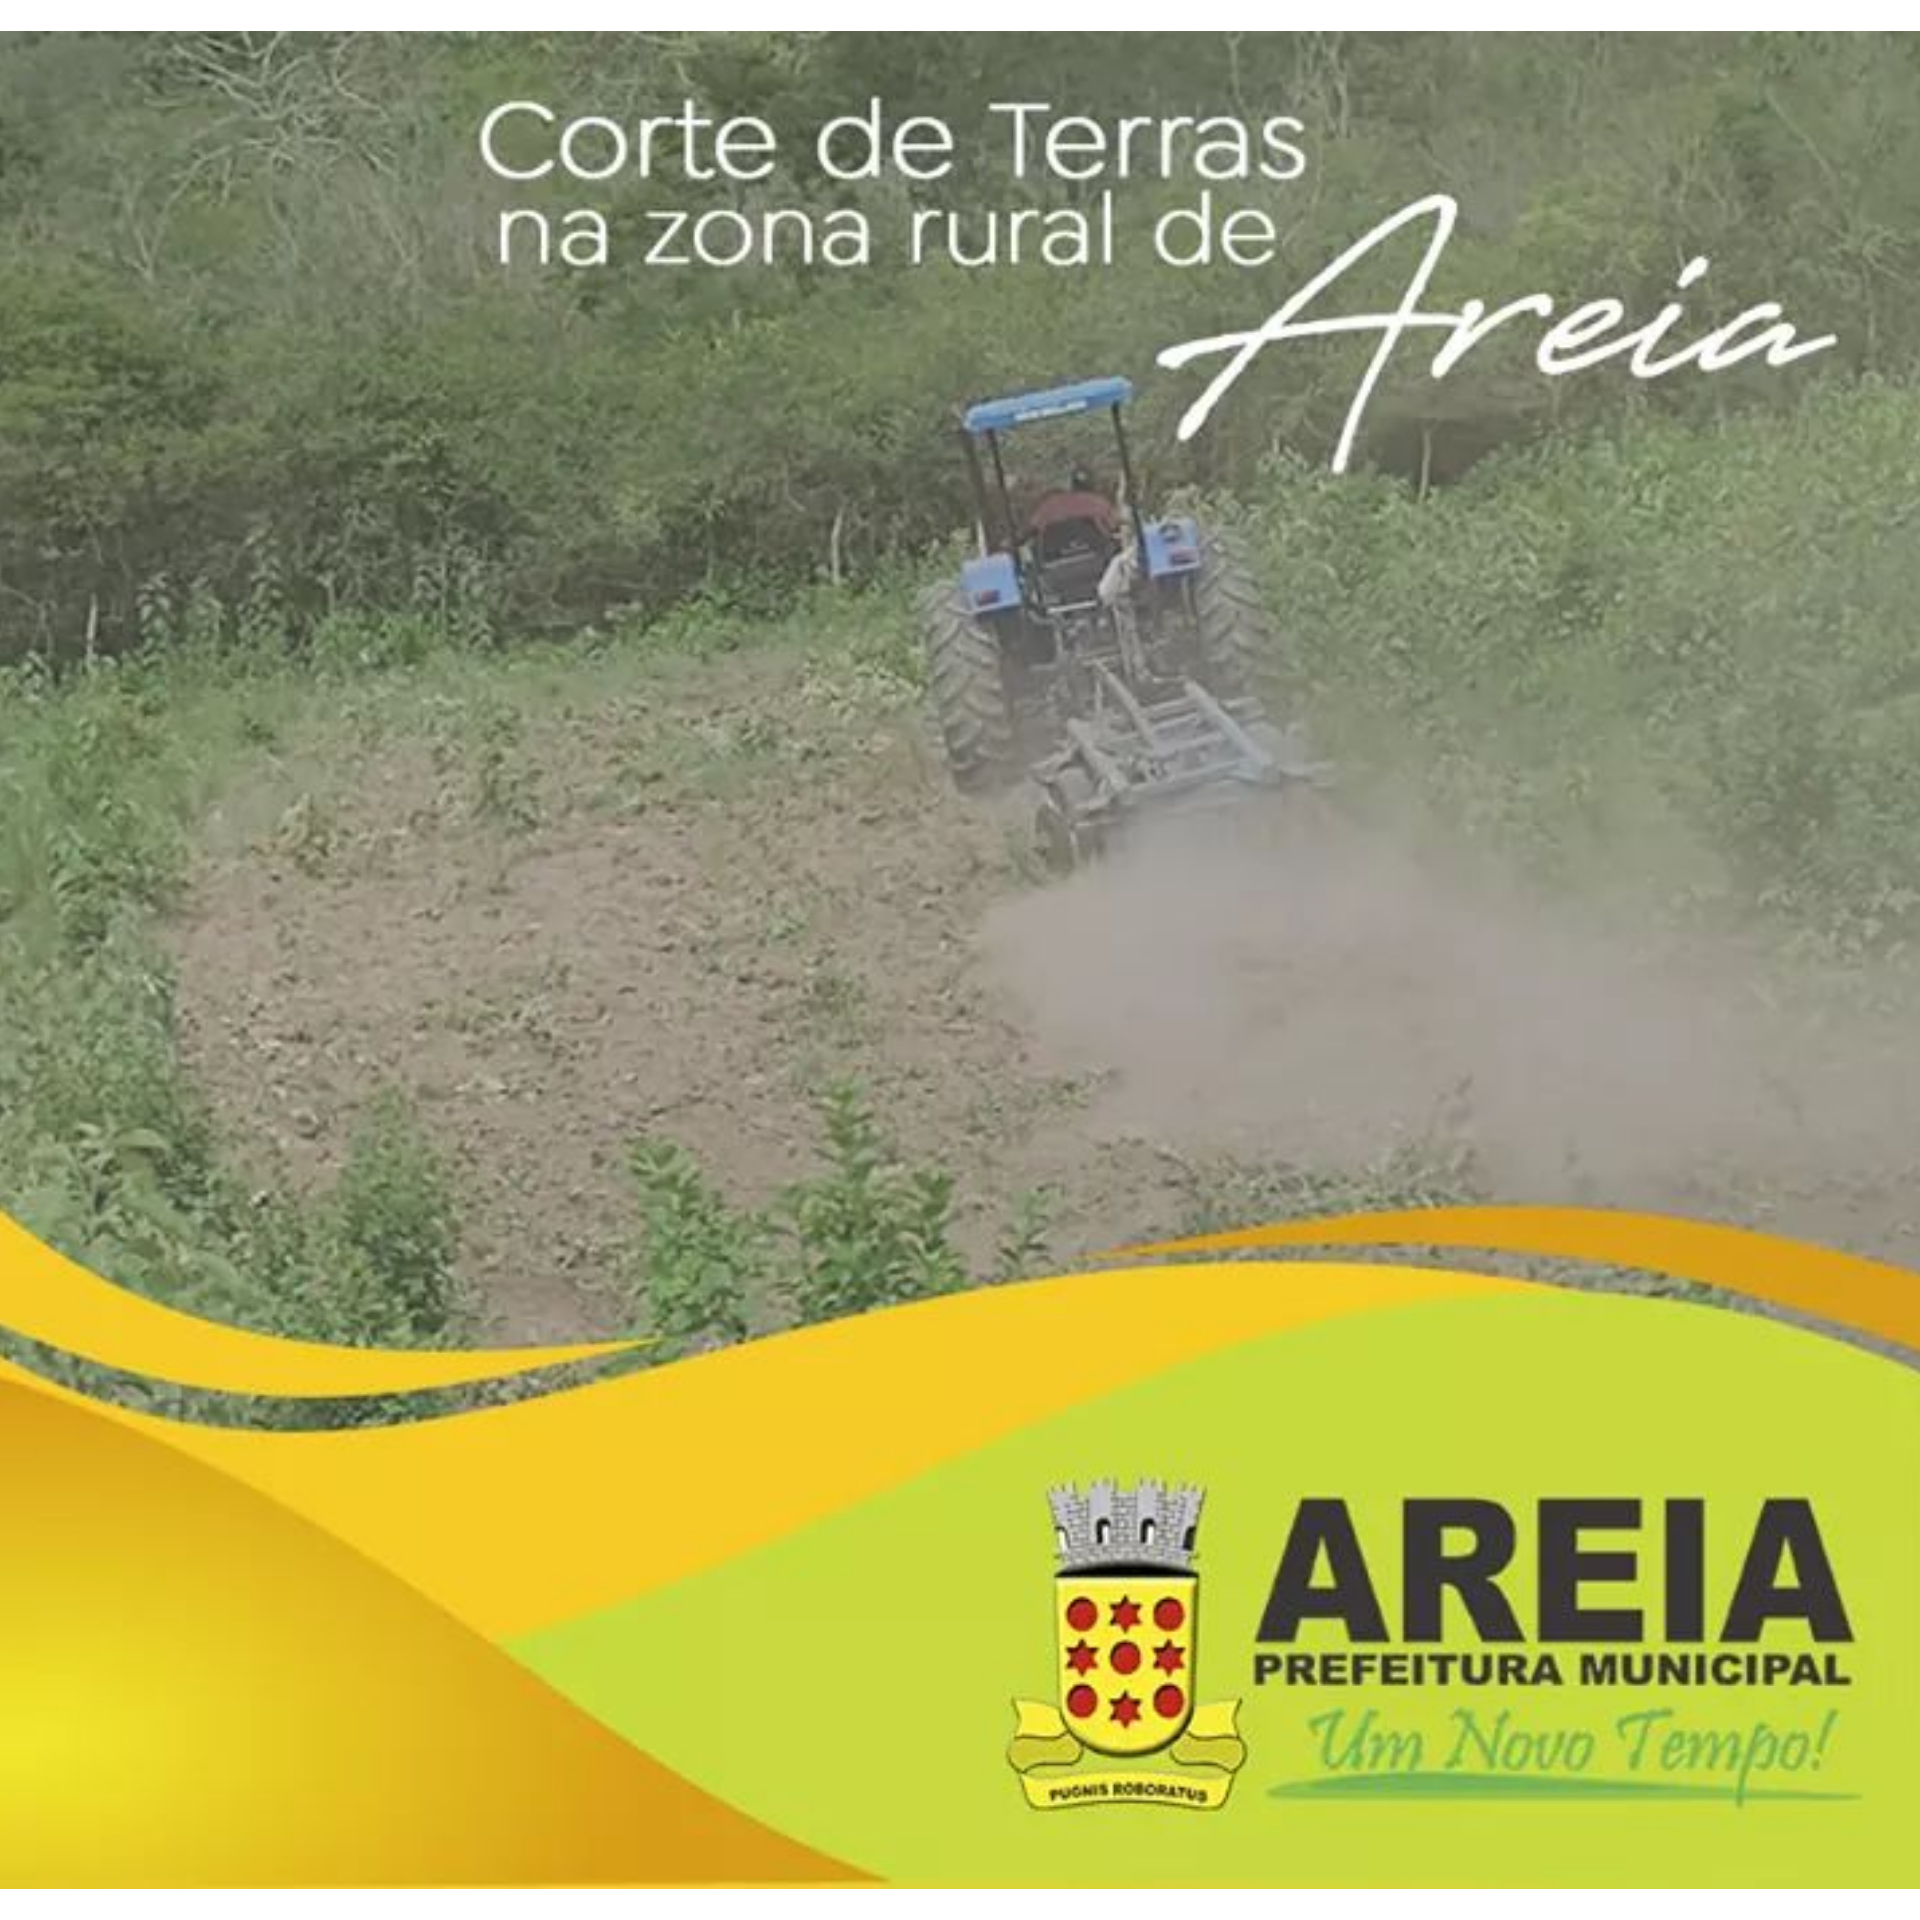 Prefeitura de Areia através da Secretaria de Agricultura inicia corte de terras dos agricultores